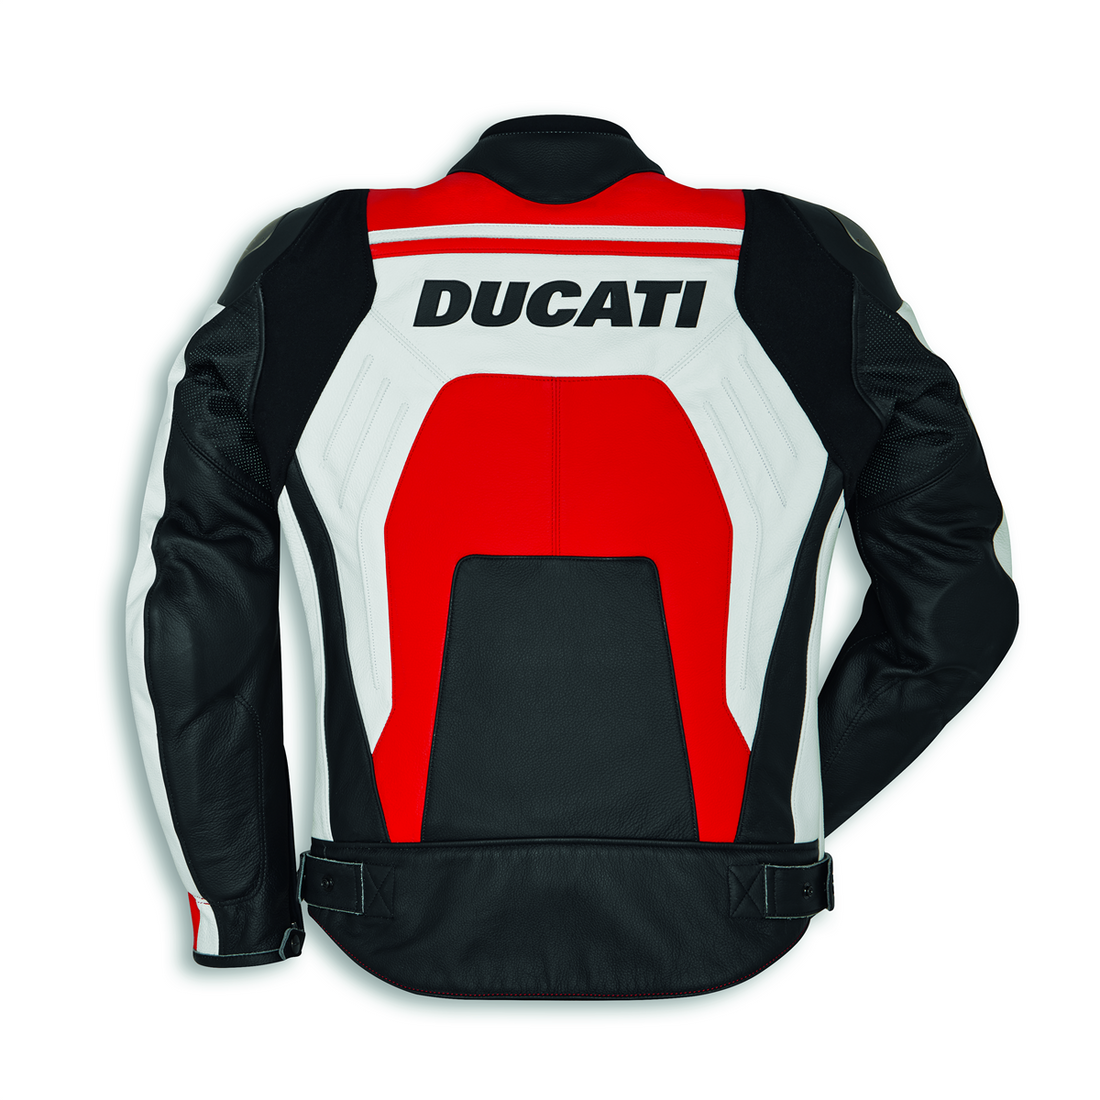 Ducati Apparel - Jackets & Suits